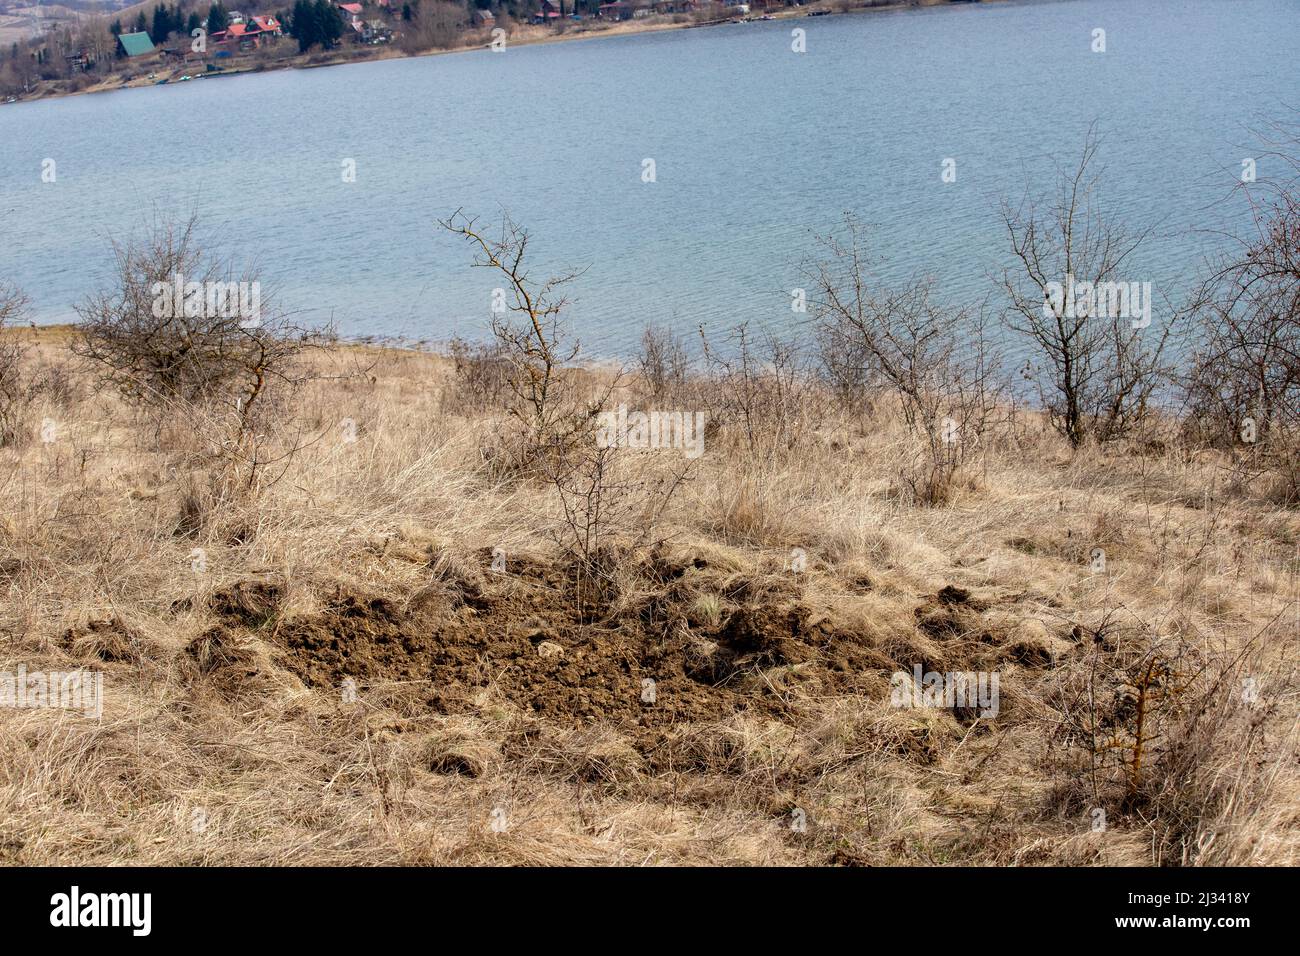 A field dug near the water by a wild boar Stock Photo